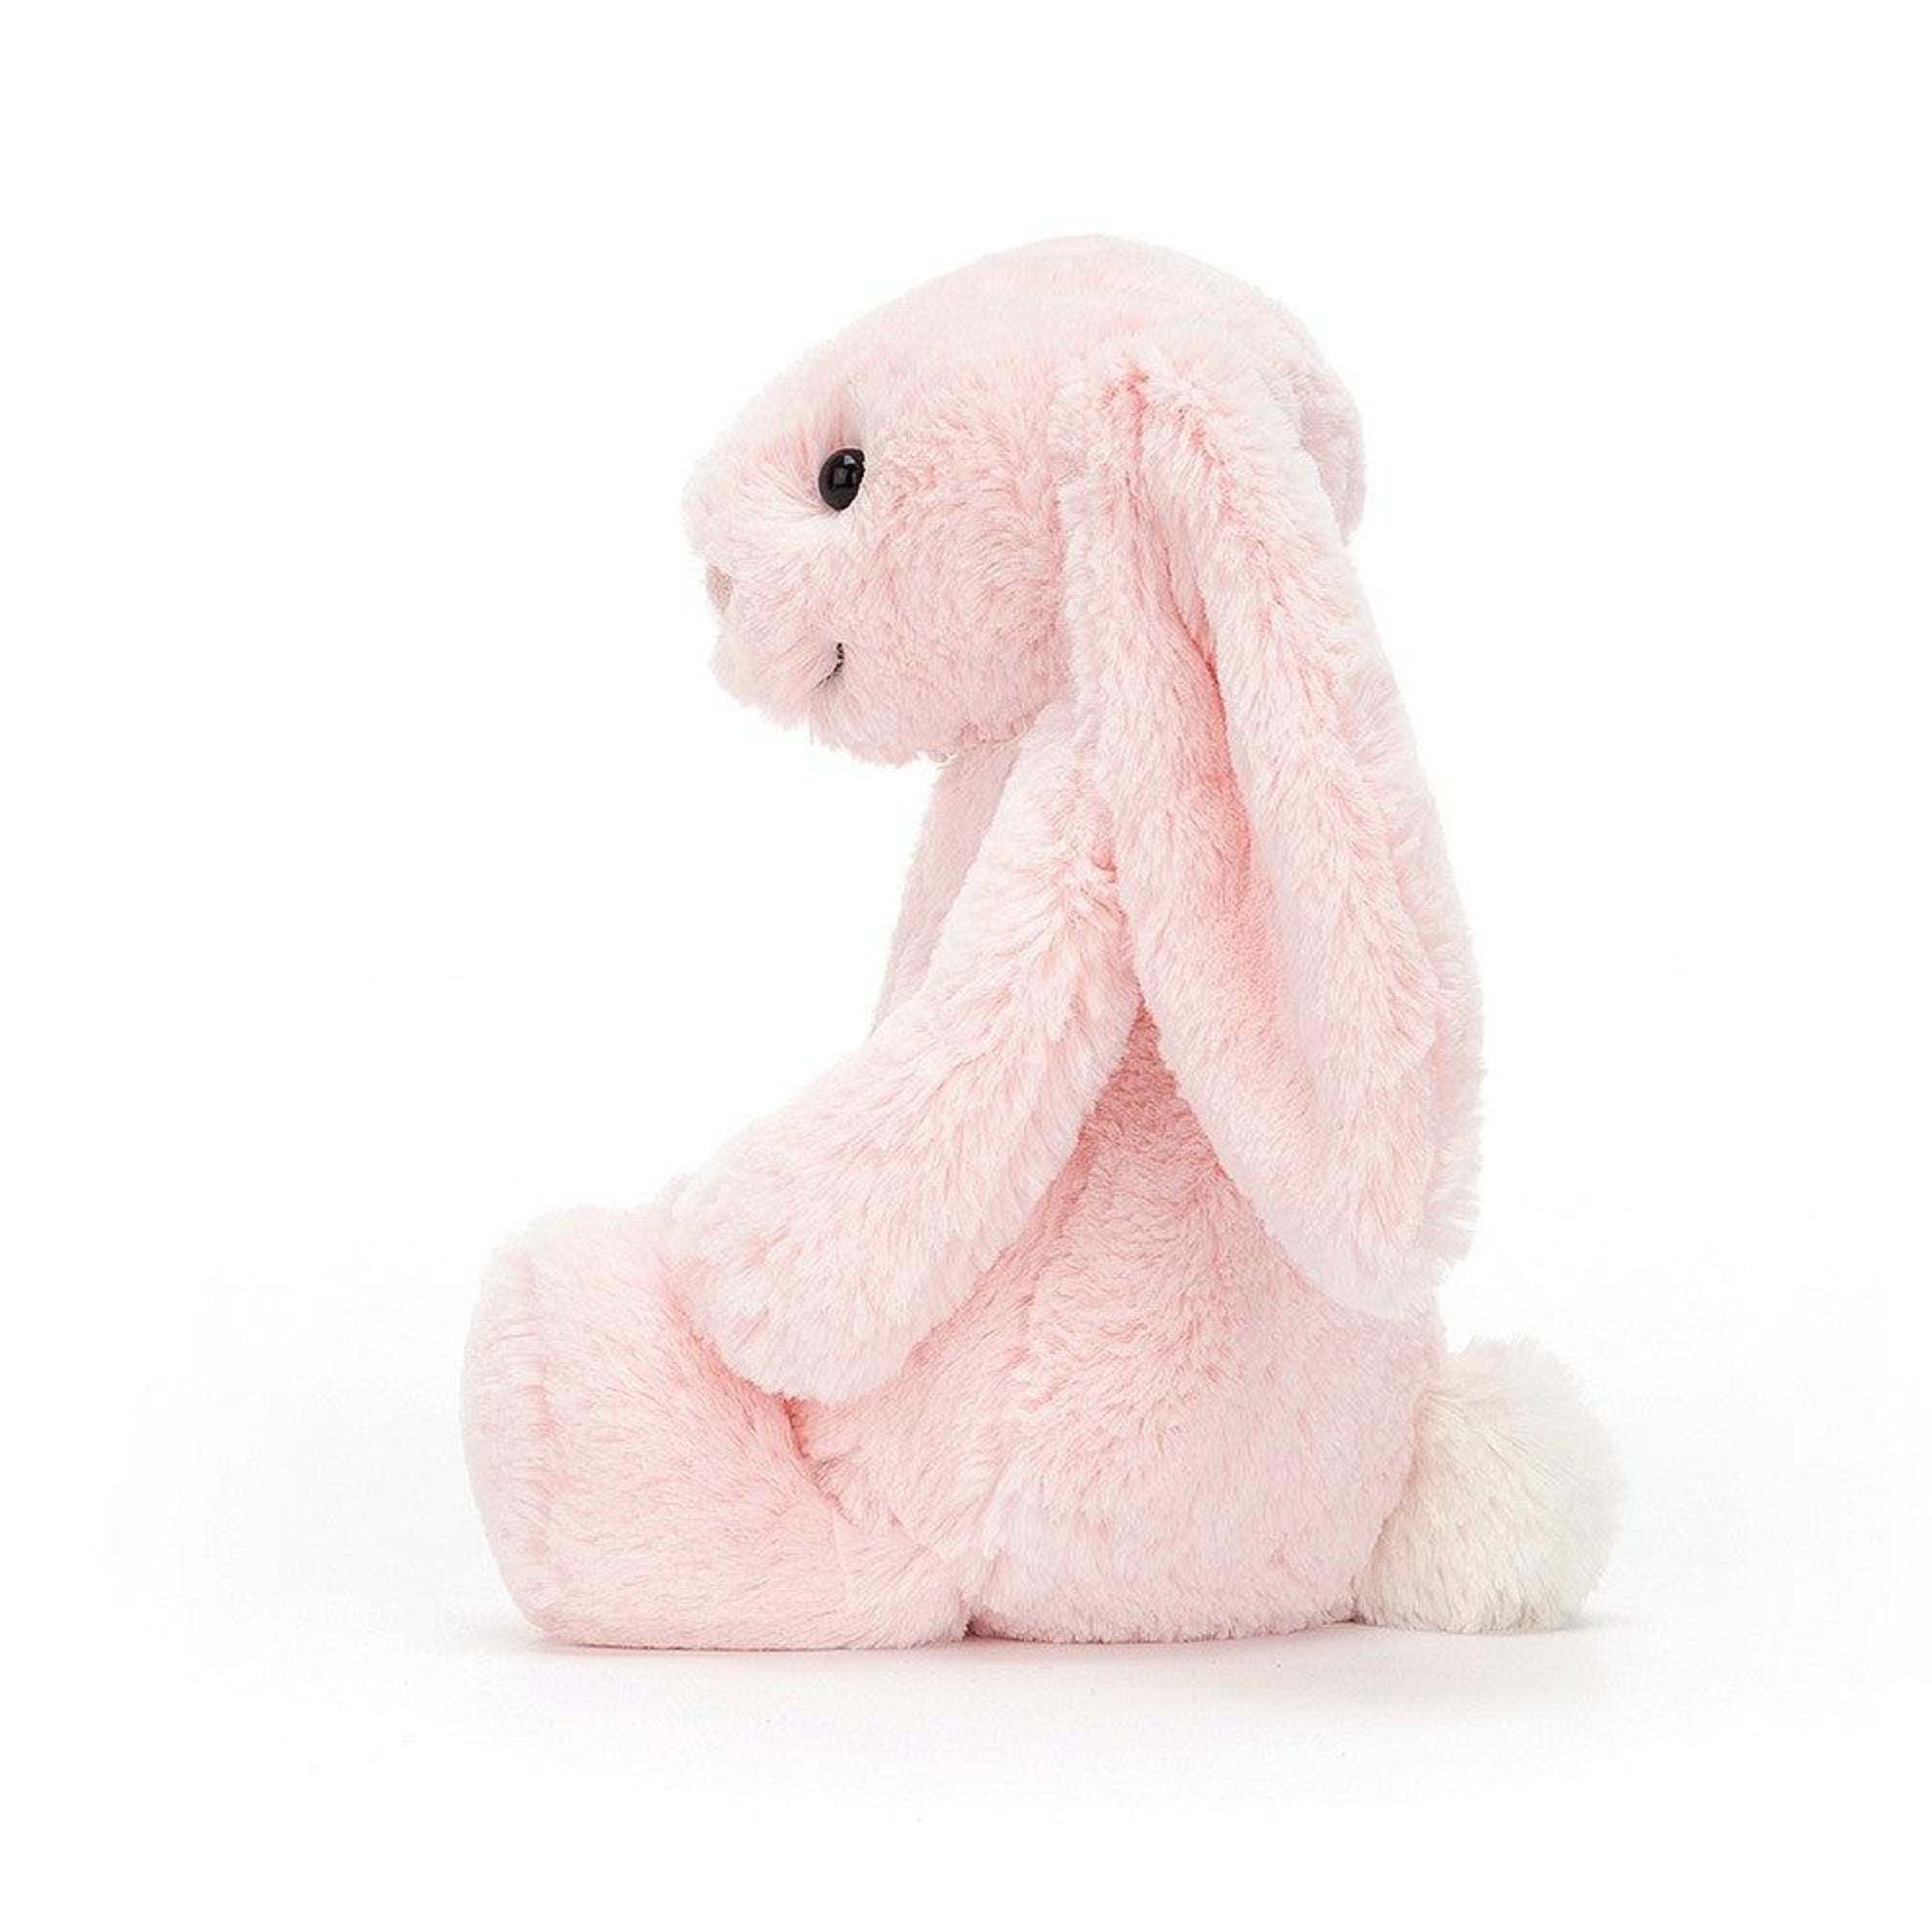 Jellycat Bashful Bunny Pink - Medium - Soft toy - Independent studios